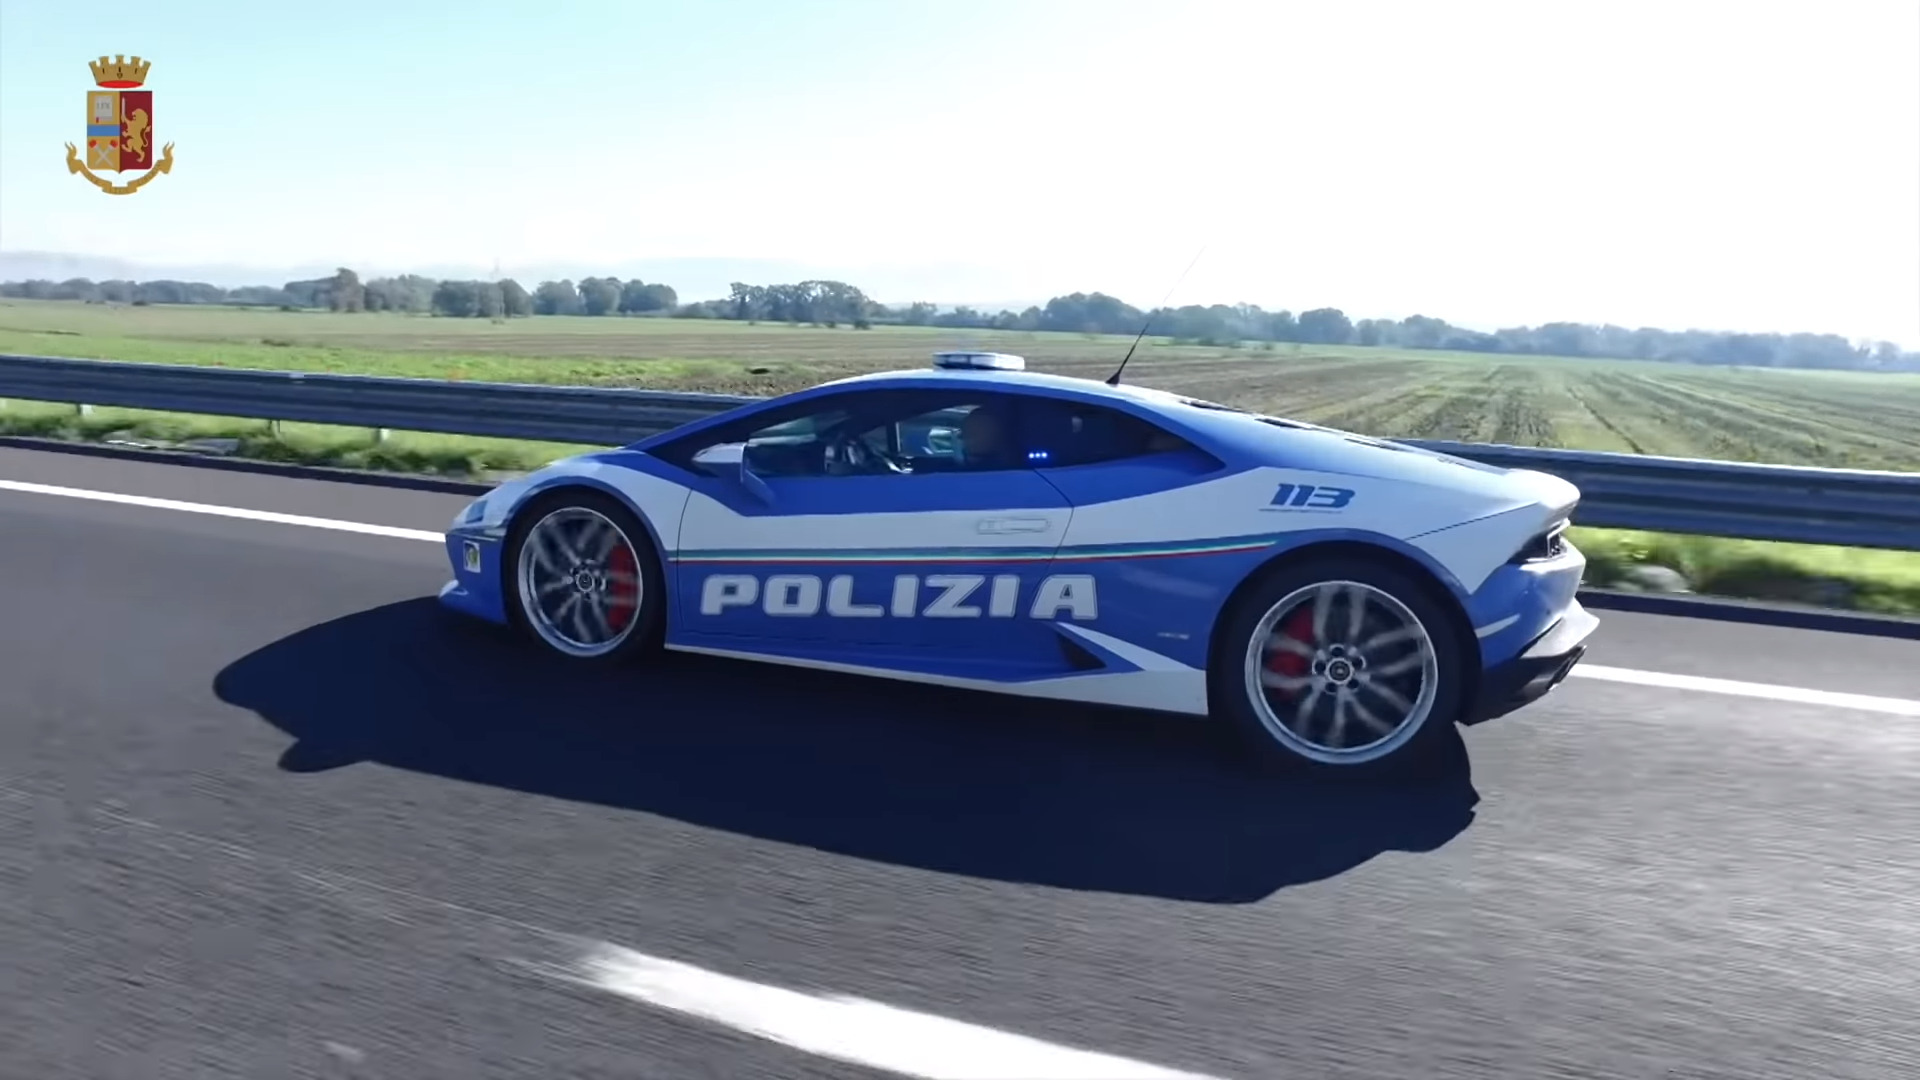 Italian police use Lamborghini Huracan to transport donor kidney